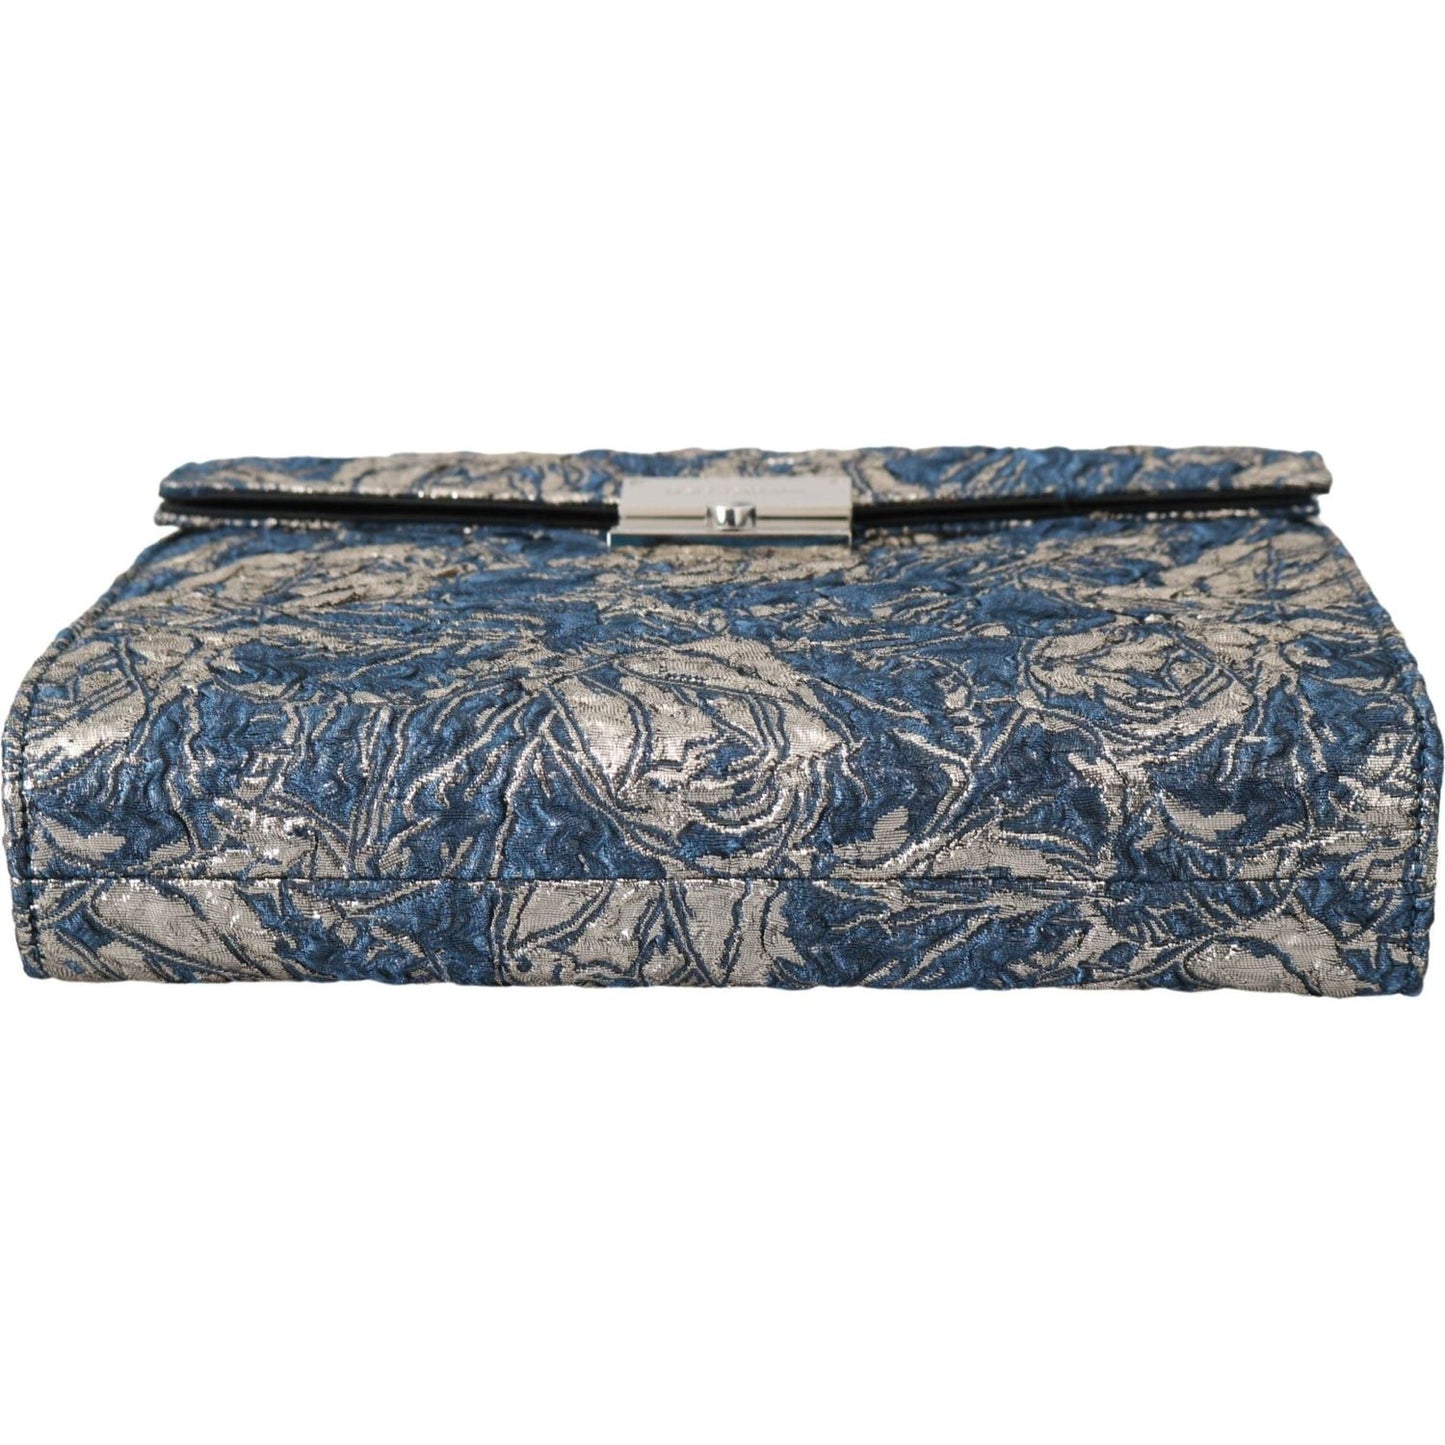 Dolce & Gabbana Elegant Blue Croc-Print Briefcase Clutch blue-silver-jacquard-leather-document-briefcase-bag Briefcase IMG_0201-1-scaled-f85e7573-27b.jpg